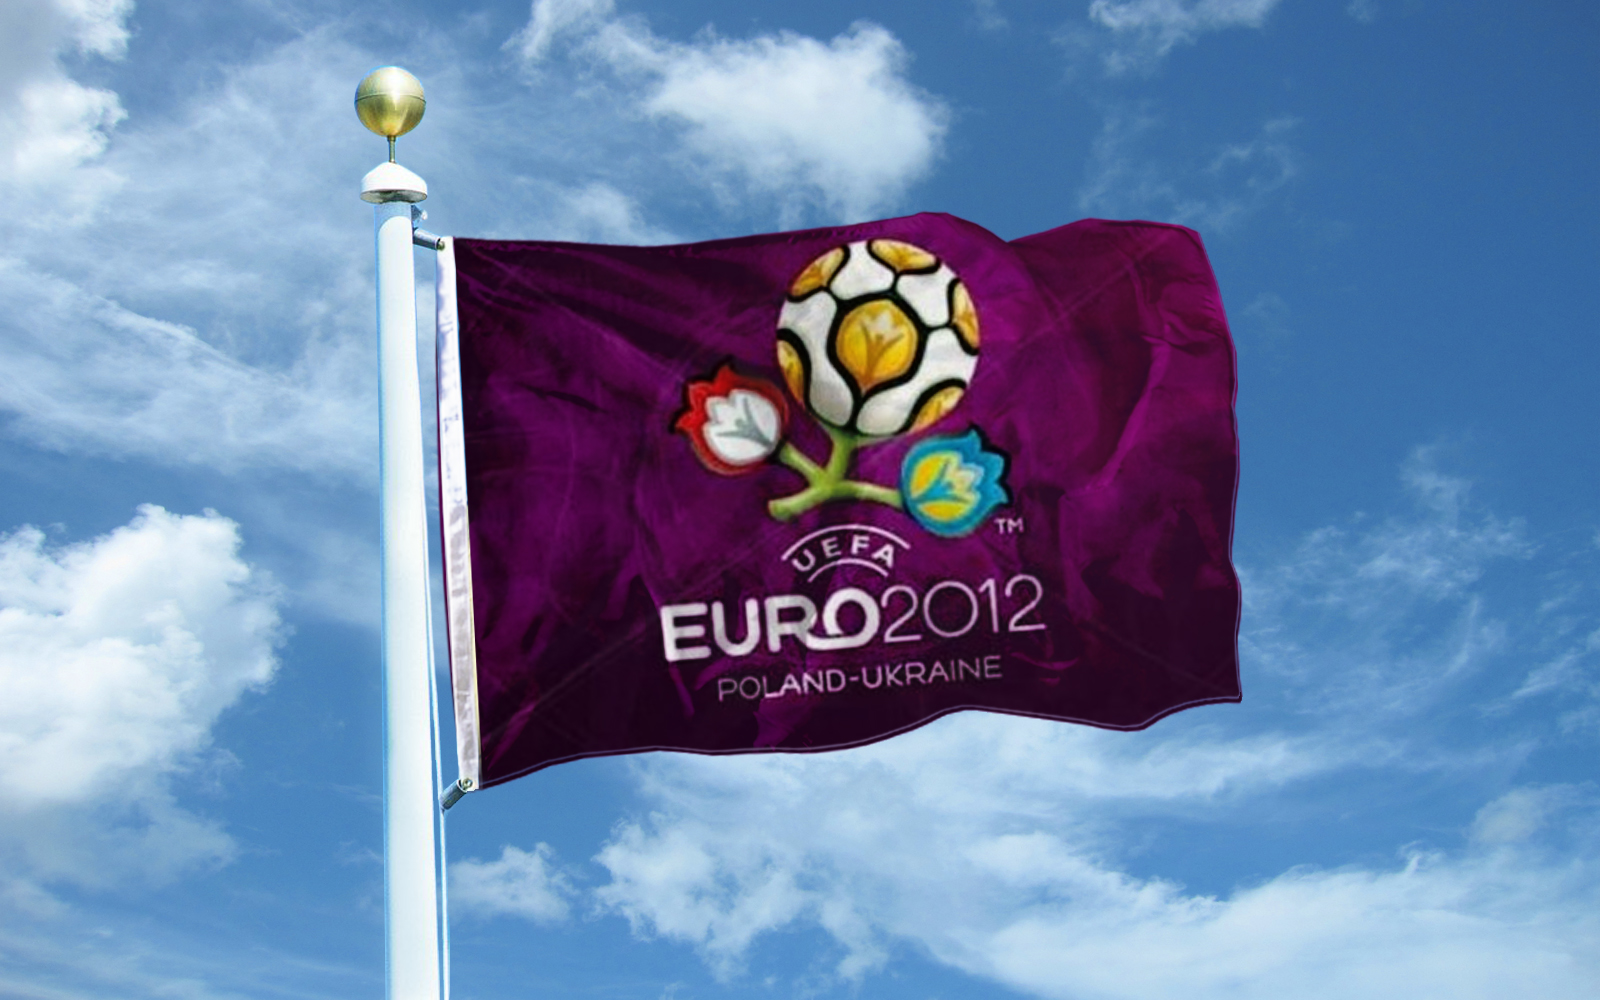 Логотип Евро 2012 на флаге. Иллюстрация: Надежда Несвит/Великая Эпоха